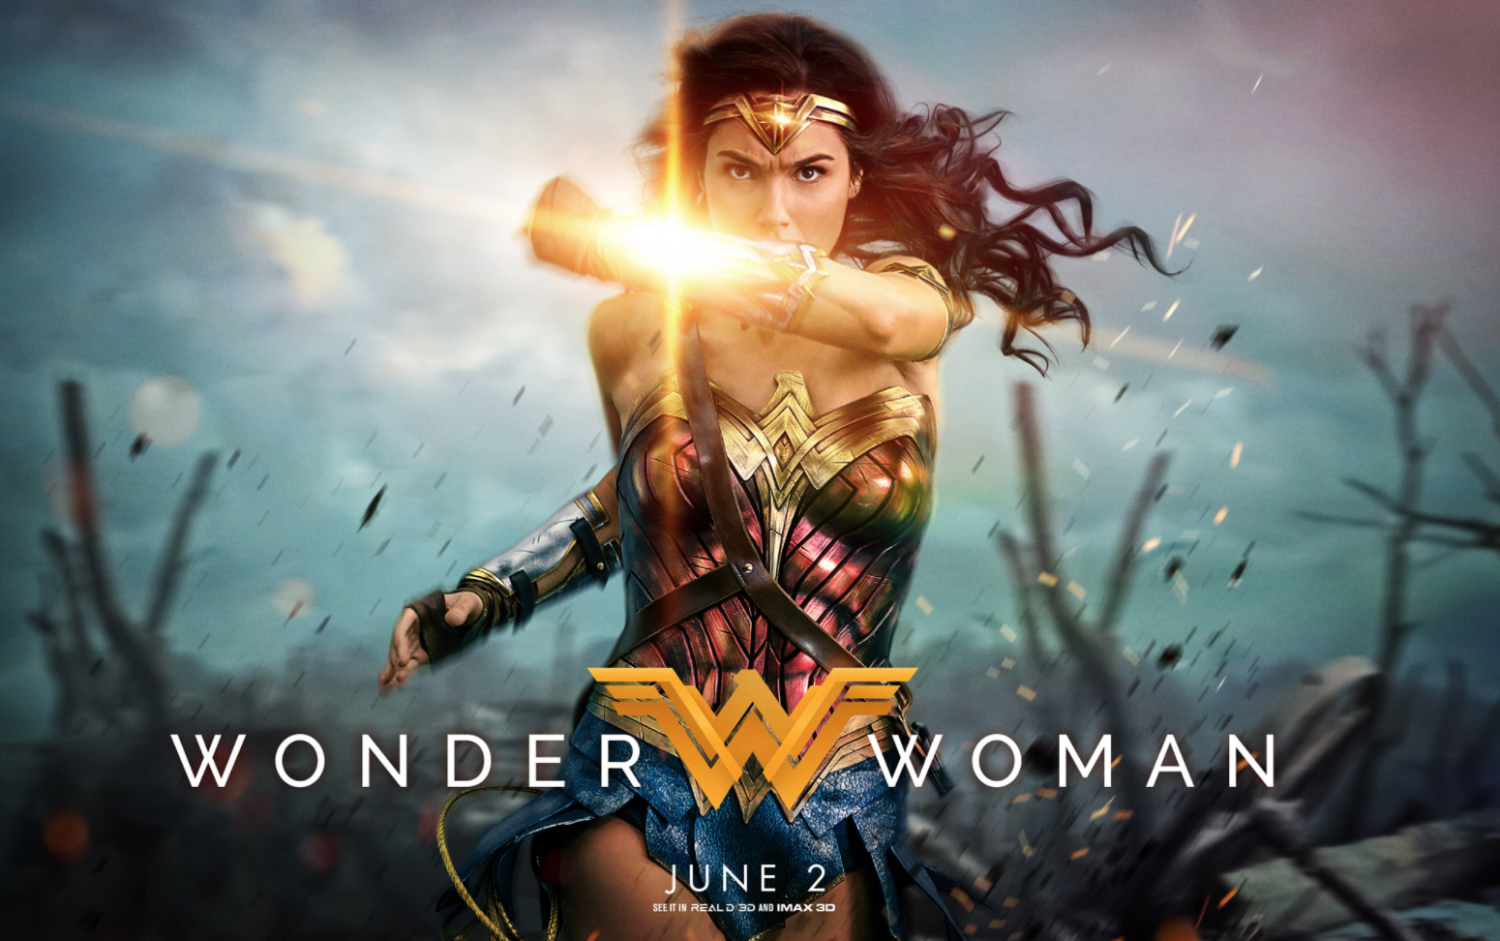 REVIEW: Wonder Woman wins